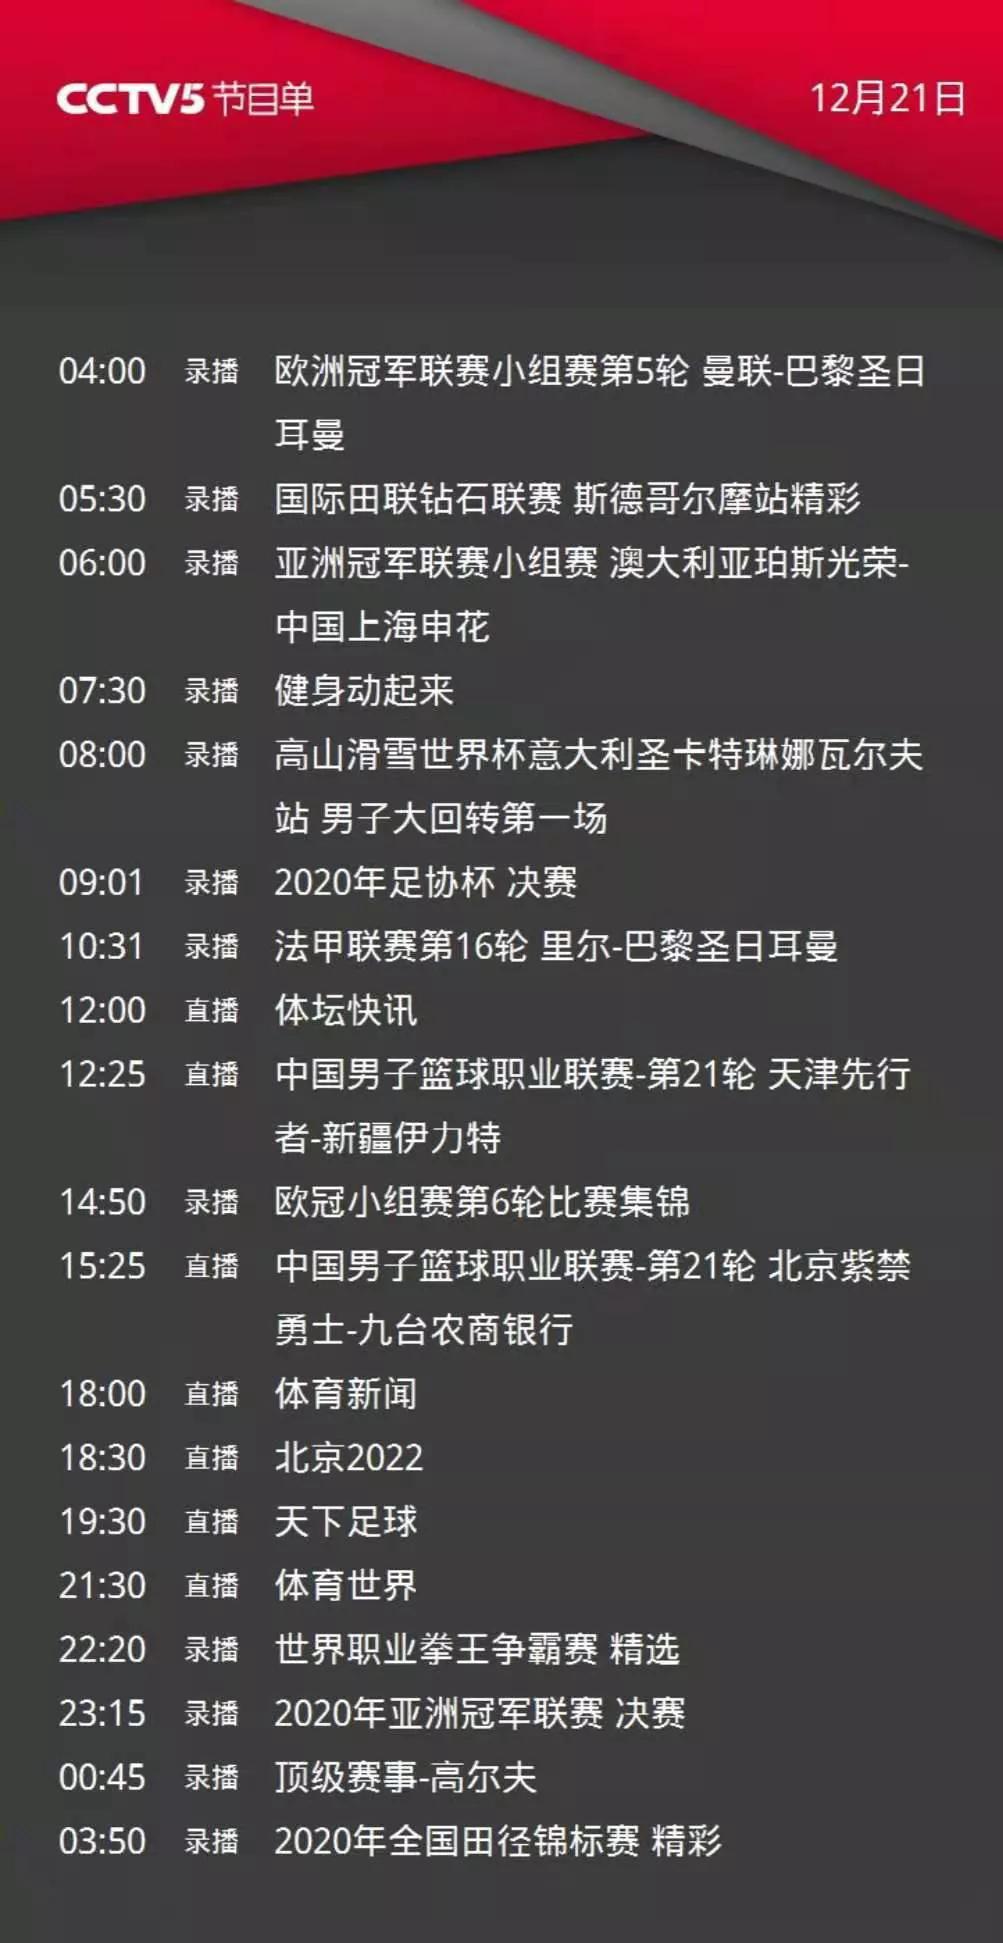 CCTV5今日节目单: 直播CBA新疆、吉林+天下足球